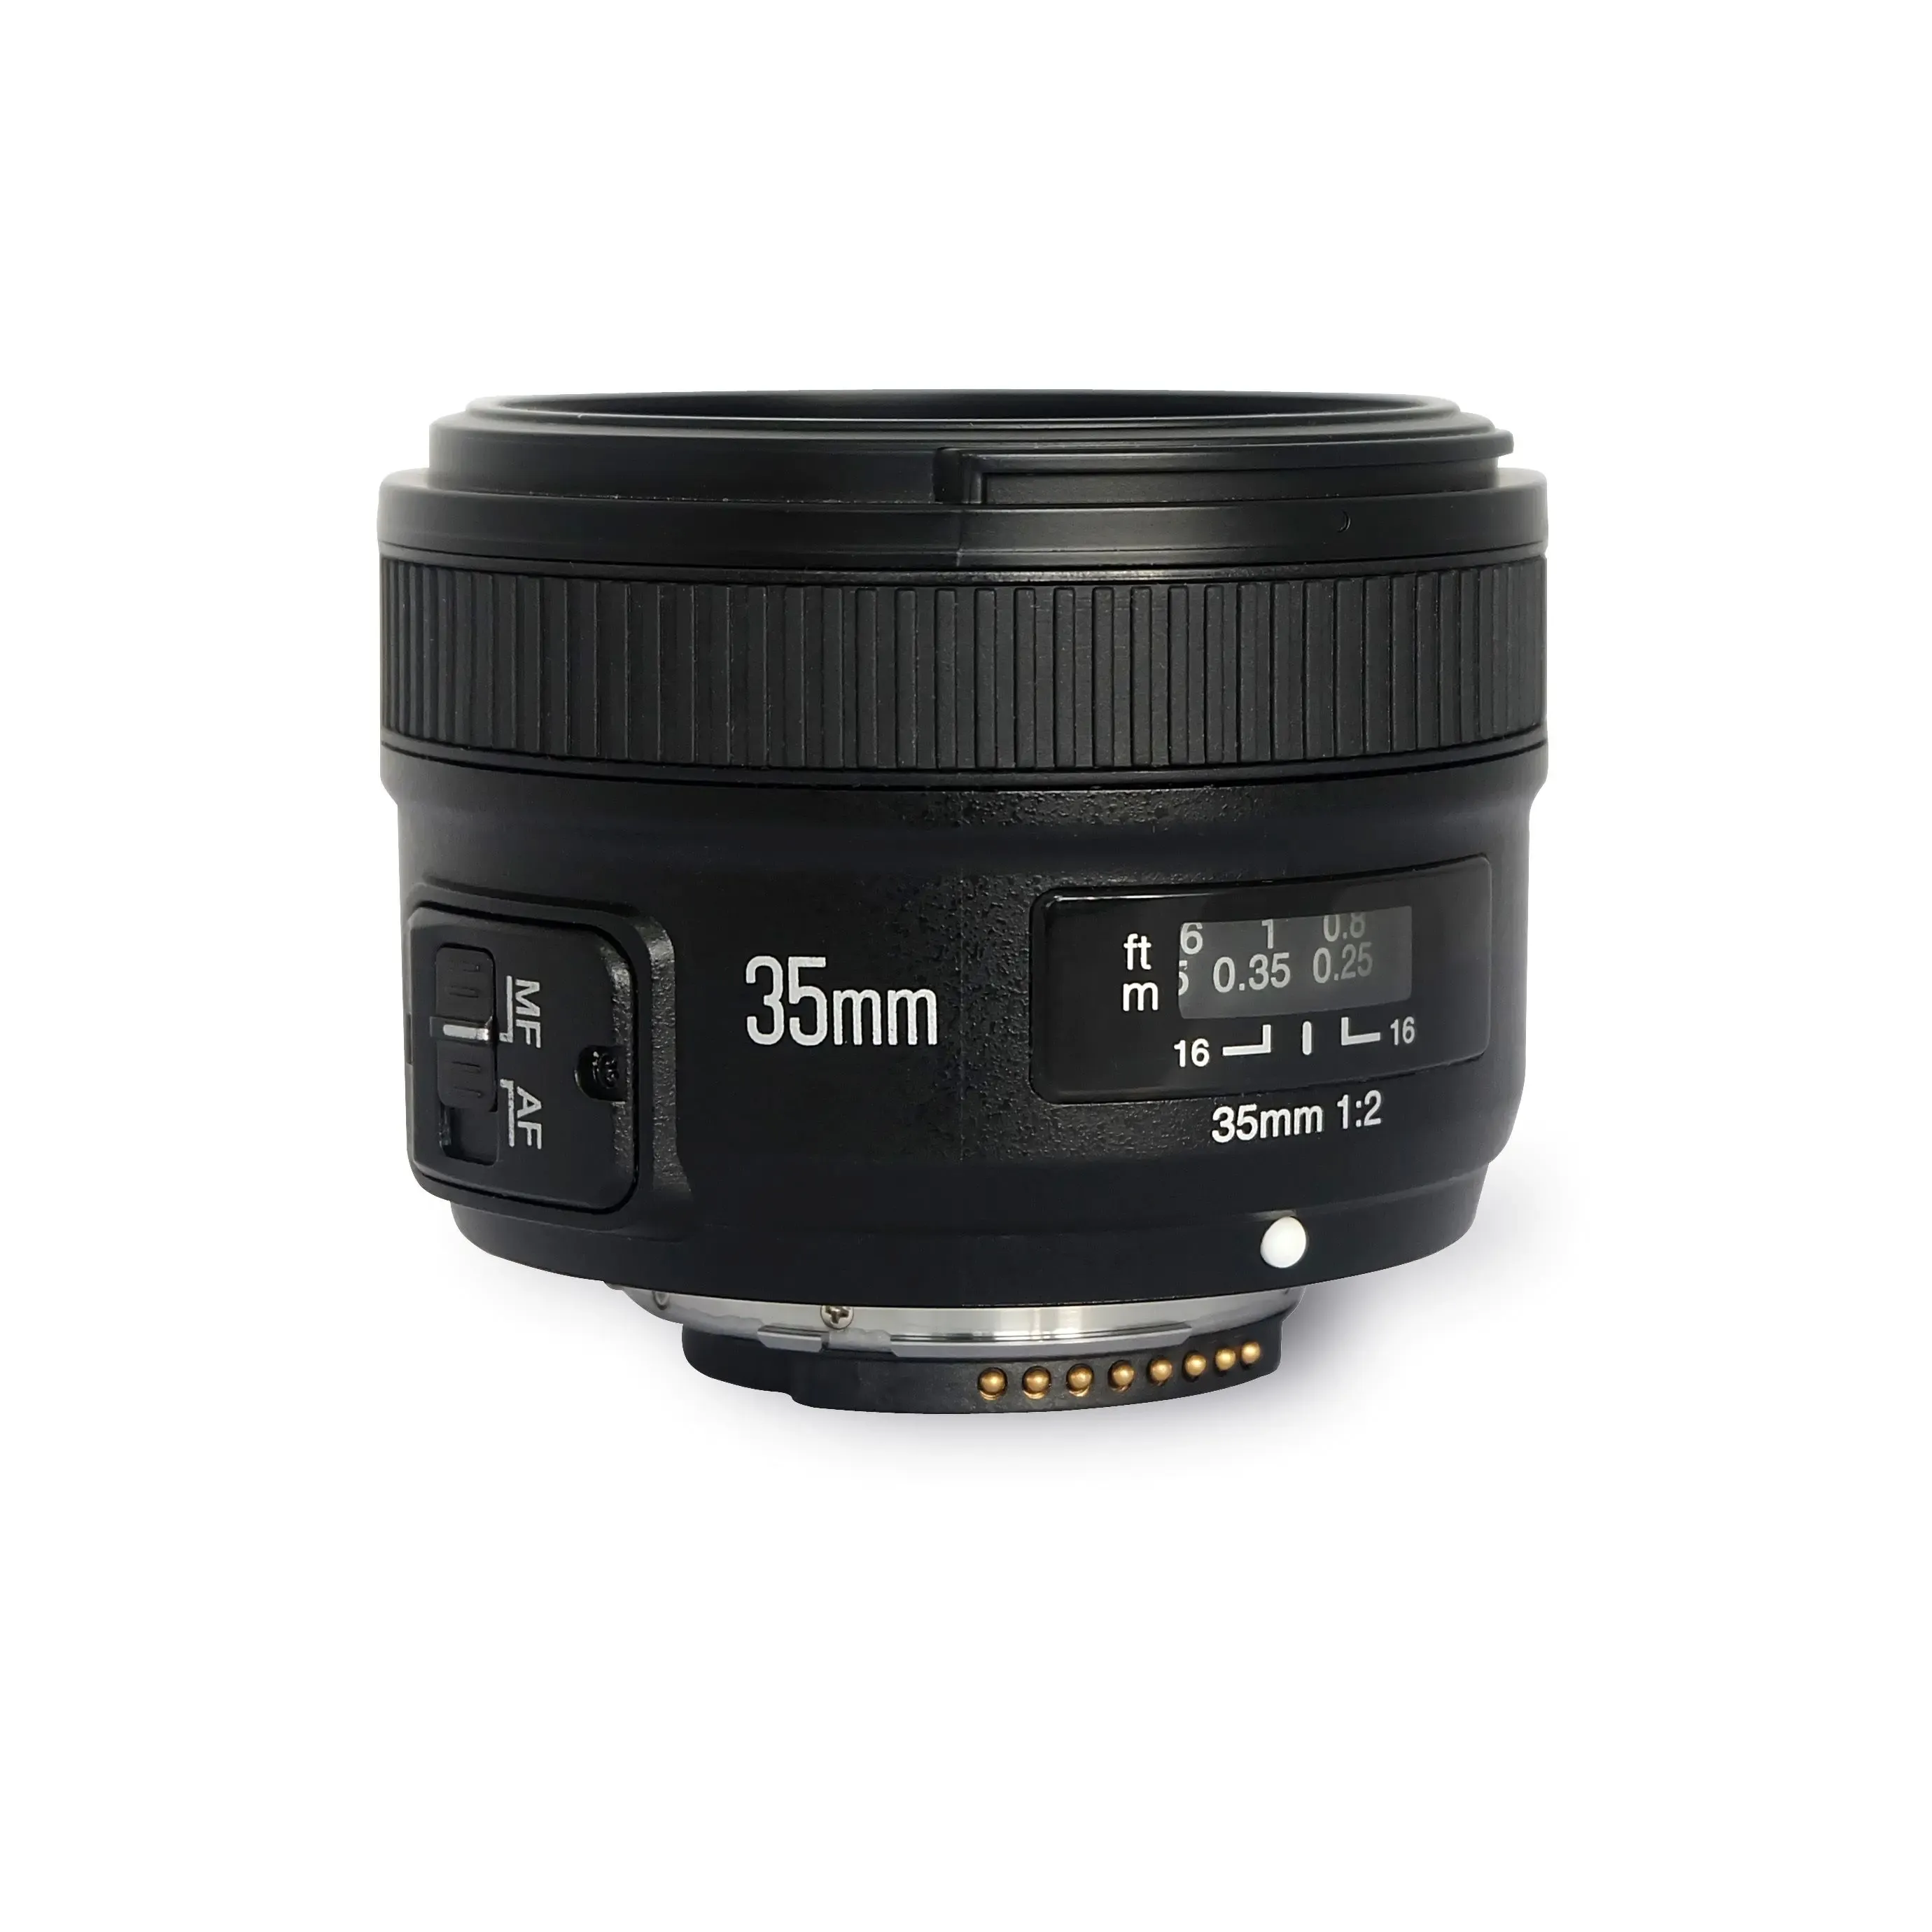 YONGNUO Camera Lens YN35mm F2 N for Nikon D7100 D3200 D3300 D3100 D5100 D90